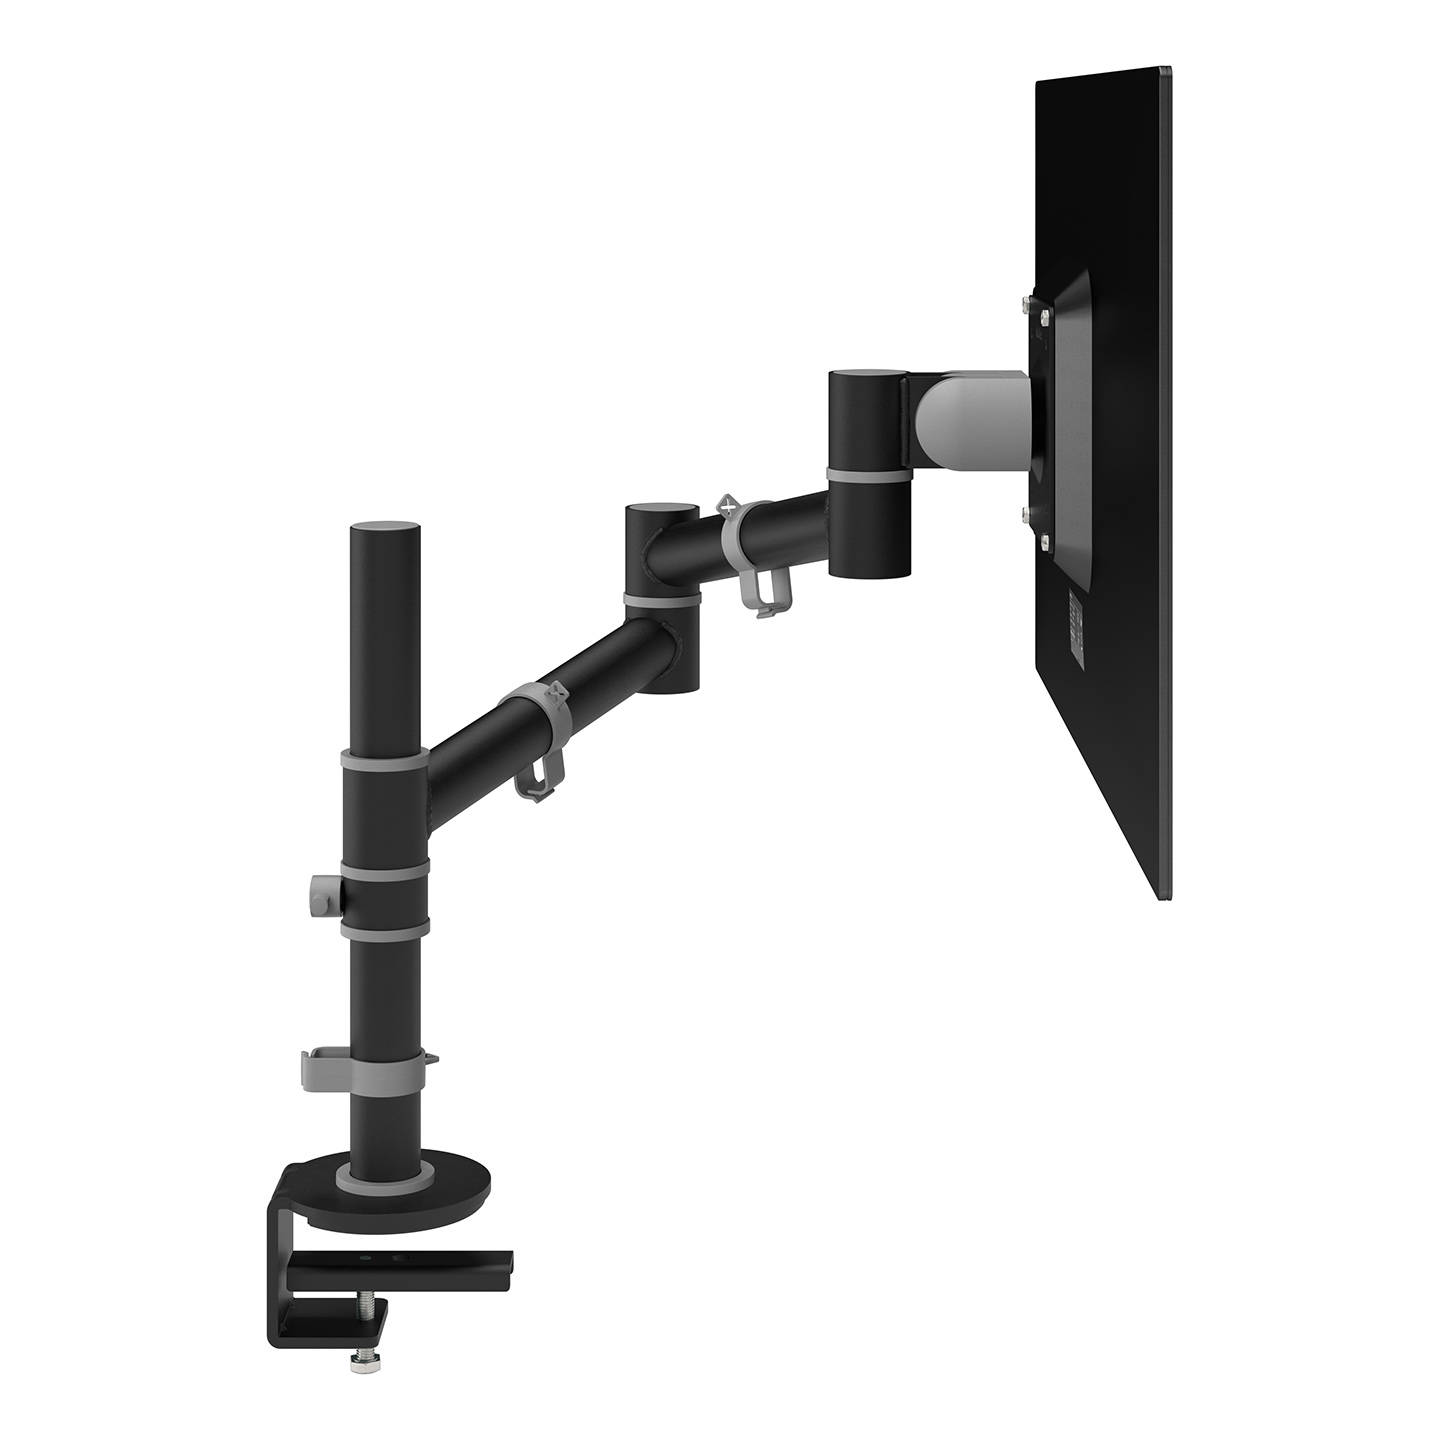 Viewgo Monitor Arm - Desk 123 / Black 